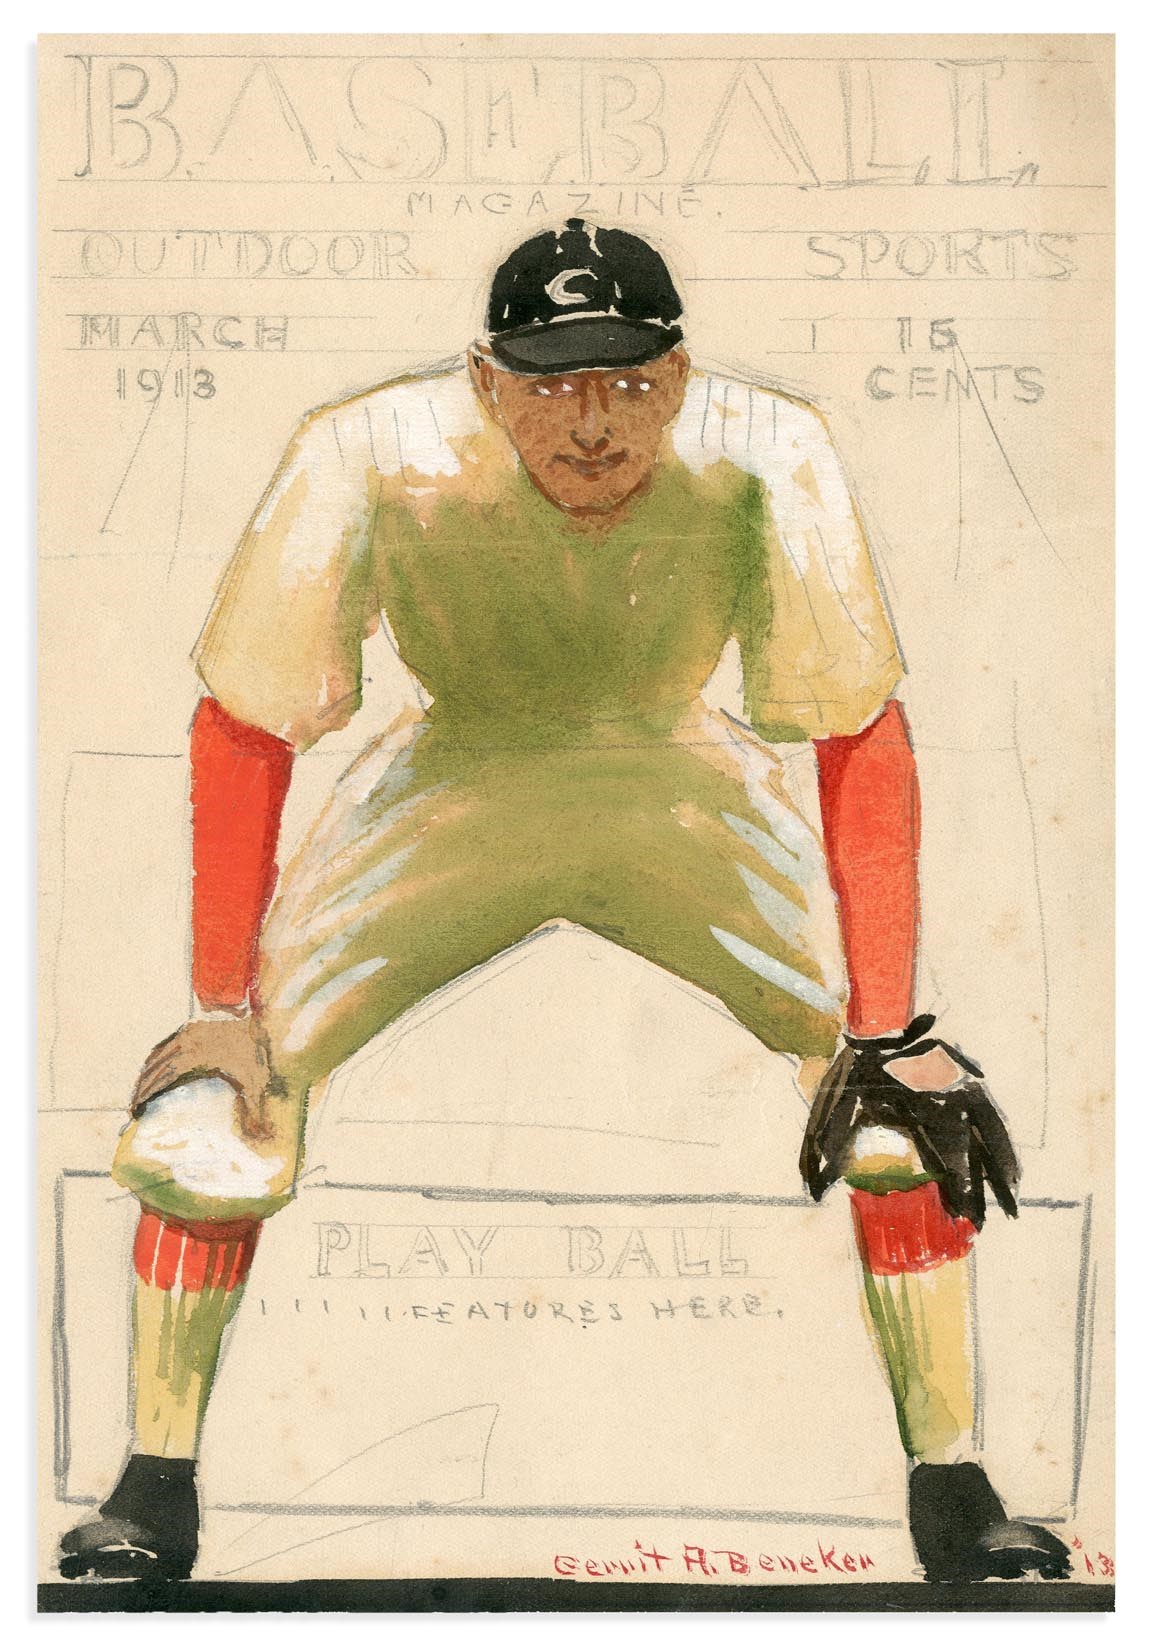 "Ty Cobb" 1913 Baseball Magazine Cover Art Study by Gerrit Beneker (1882-1934)